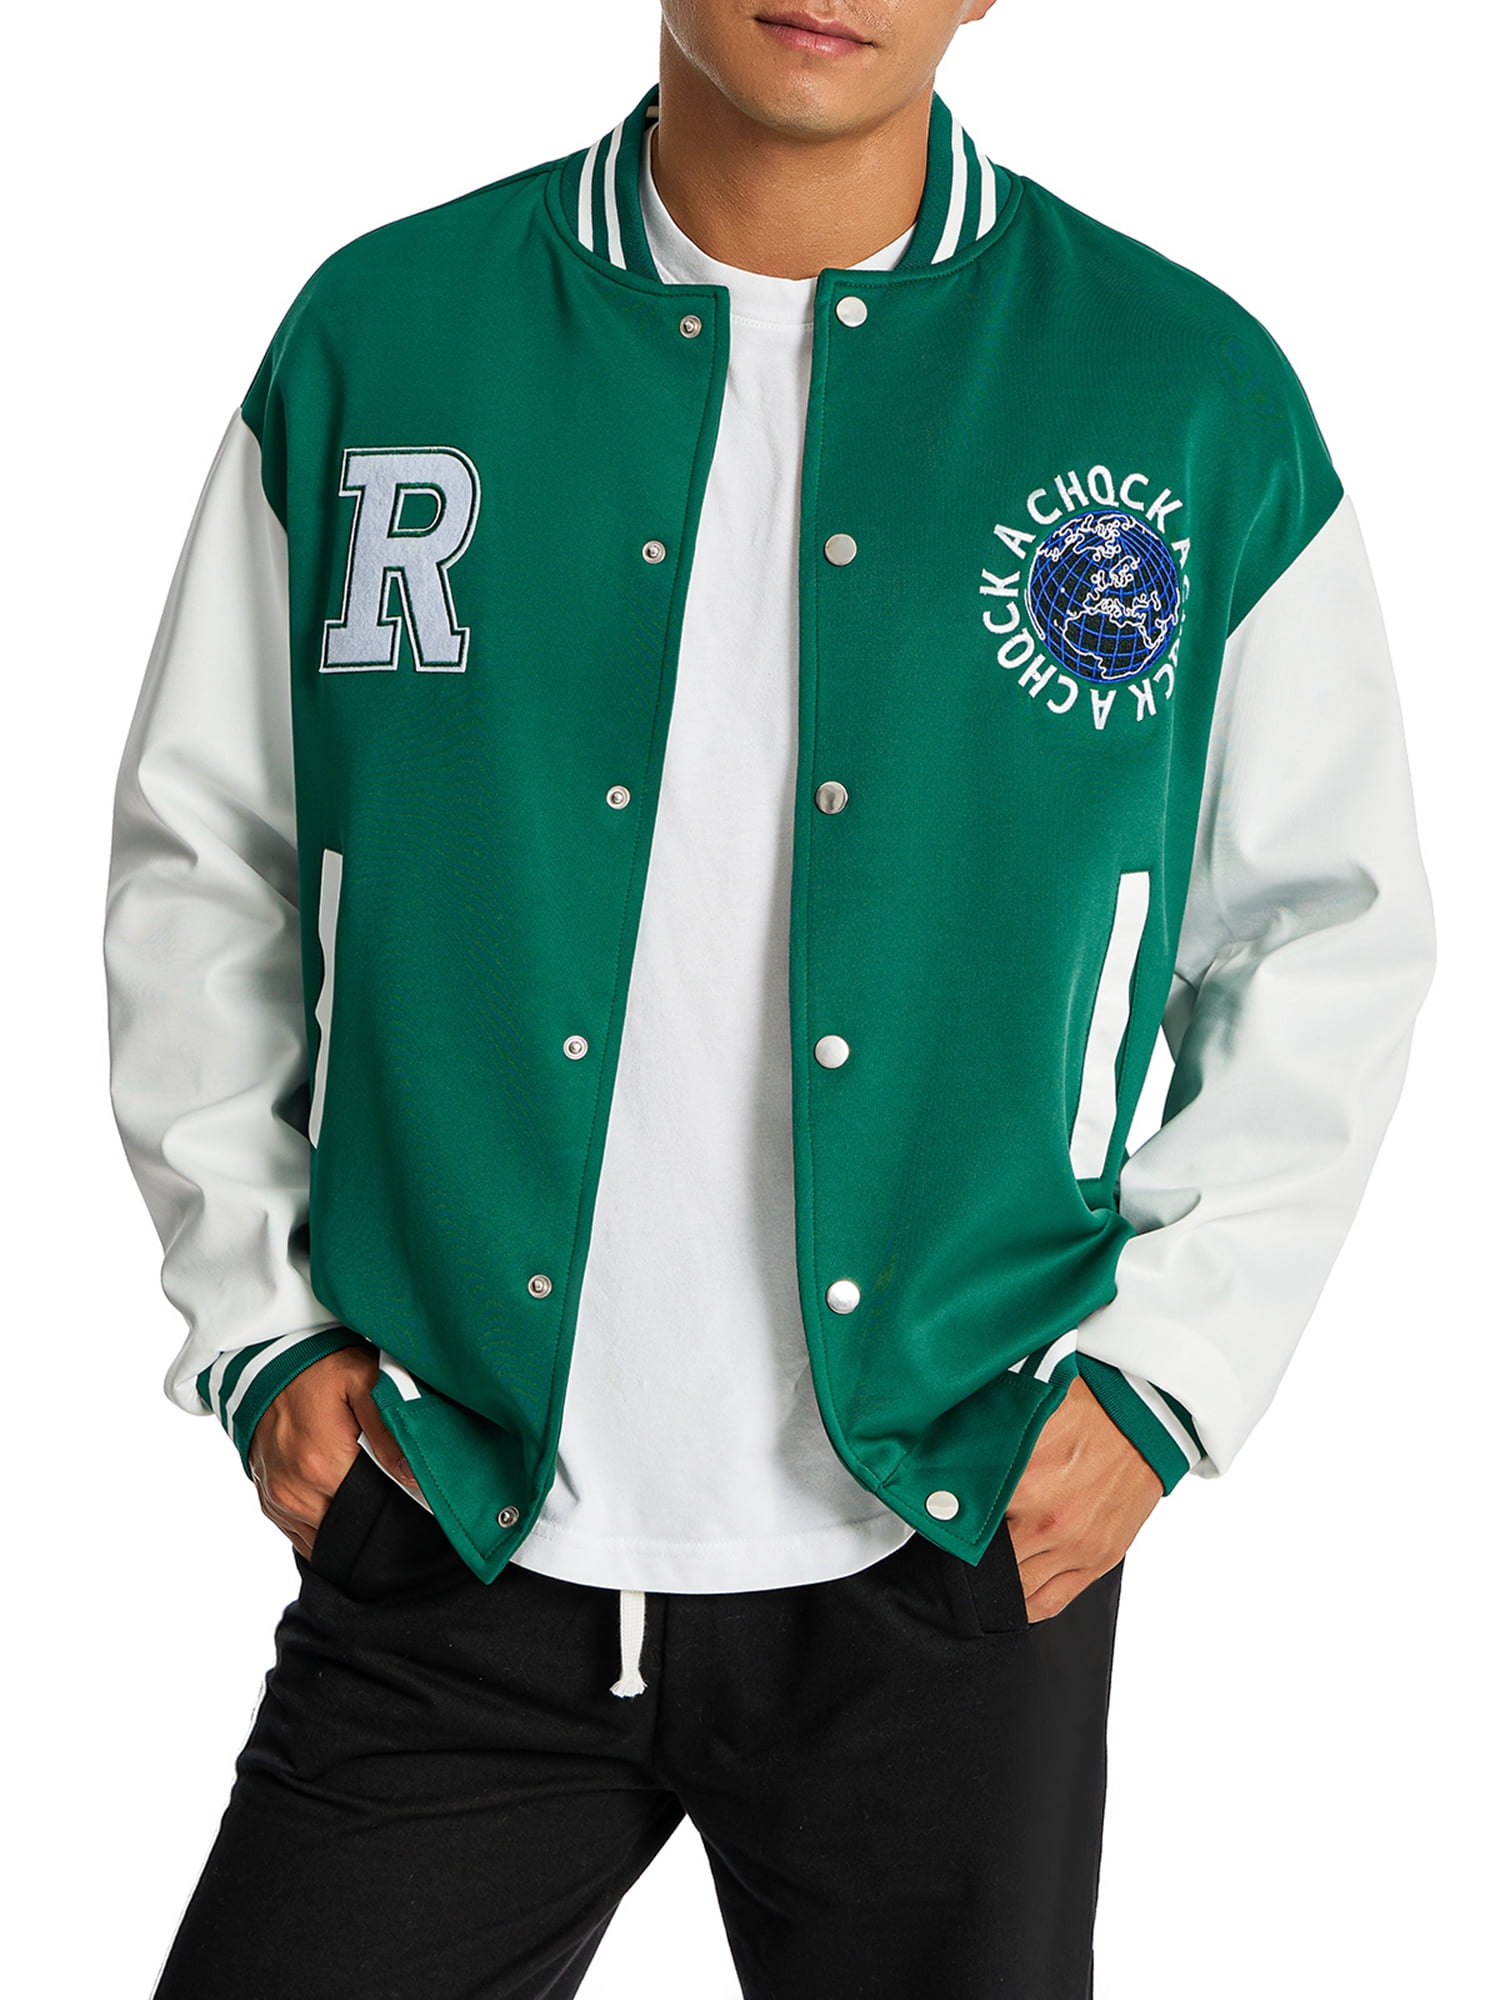 Men's Green Varsity Jackets